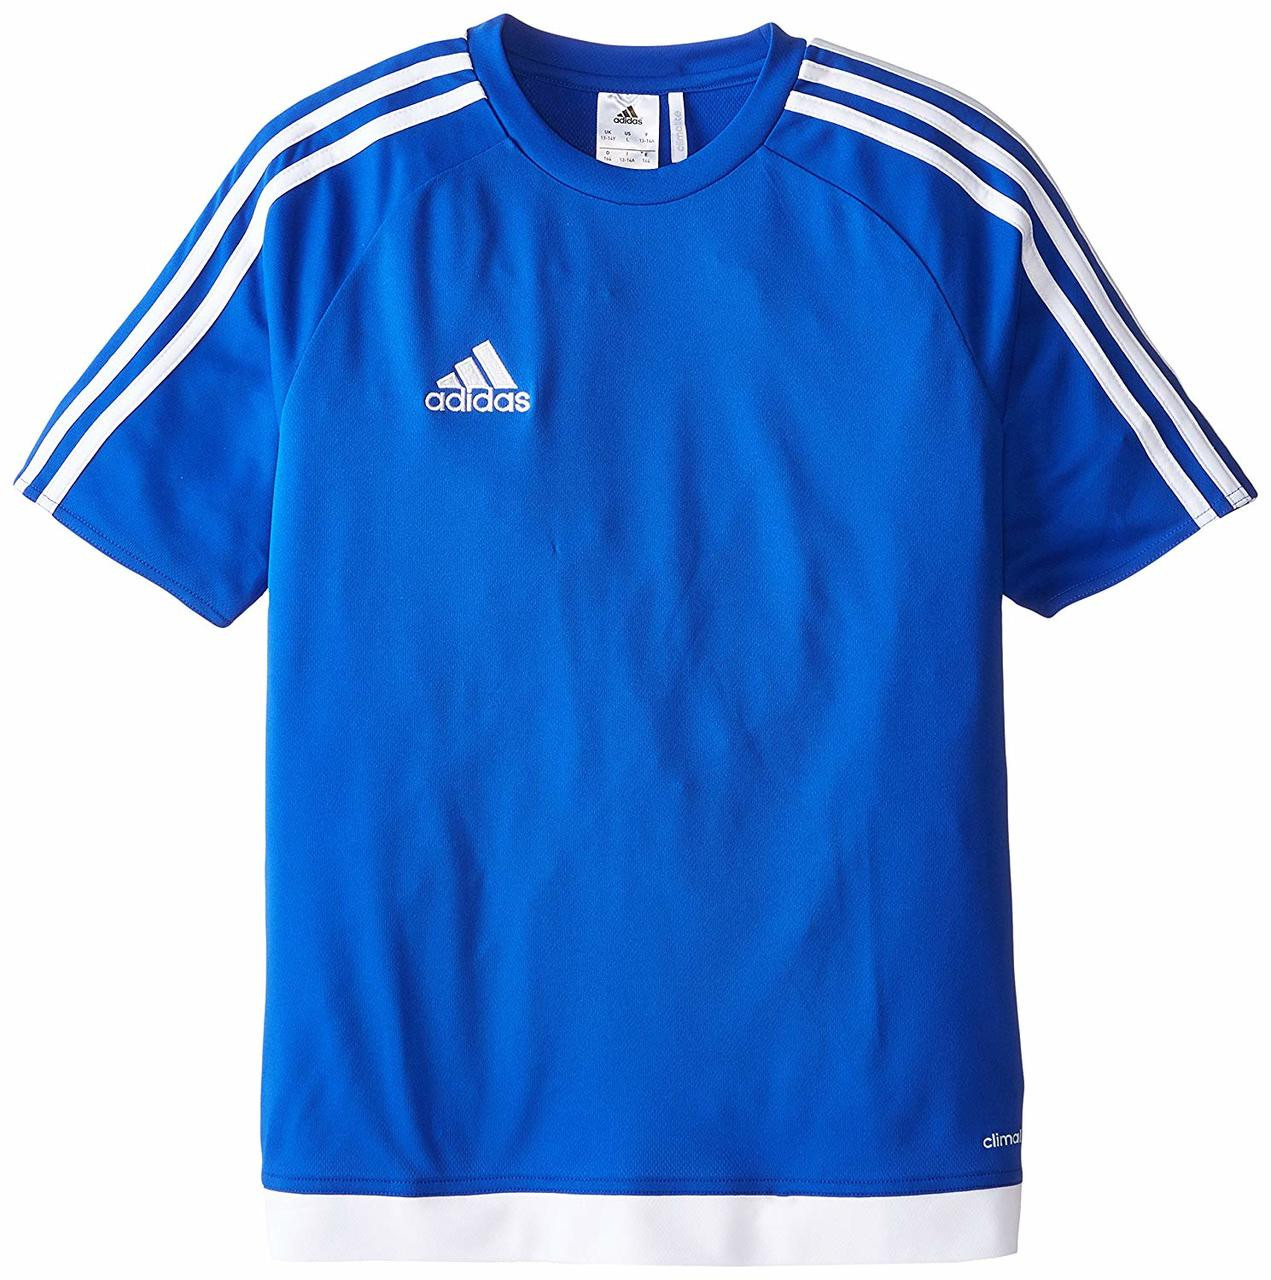 adidas blue soccer jersey